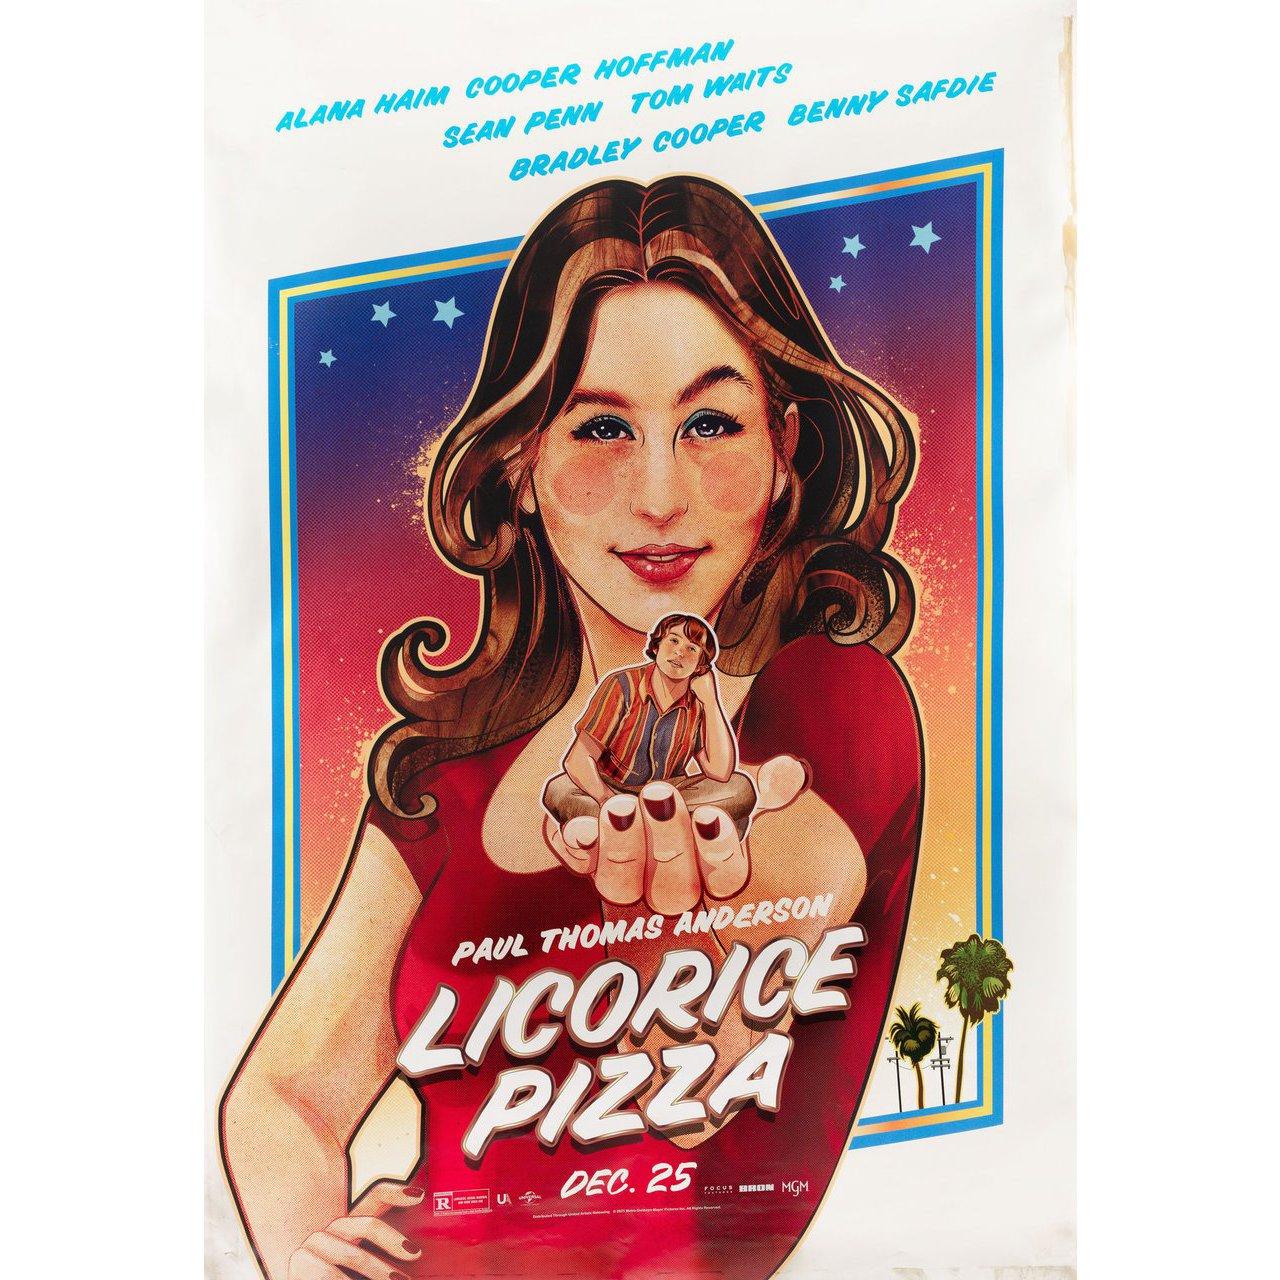 licorice pizza movie poster